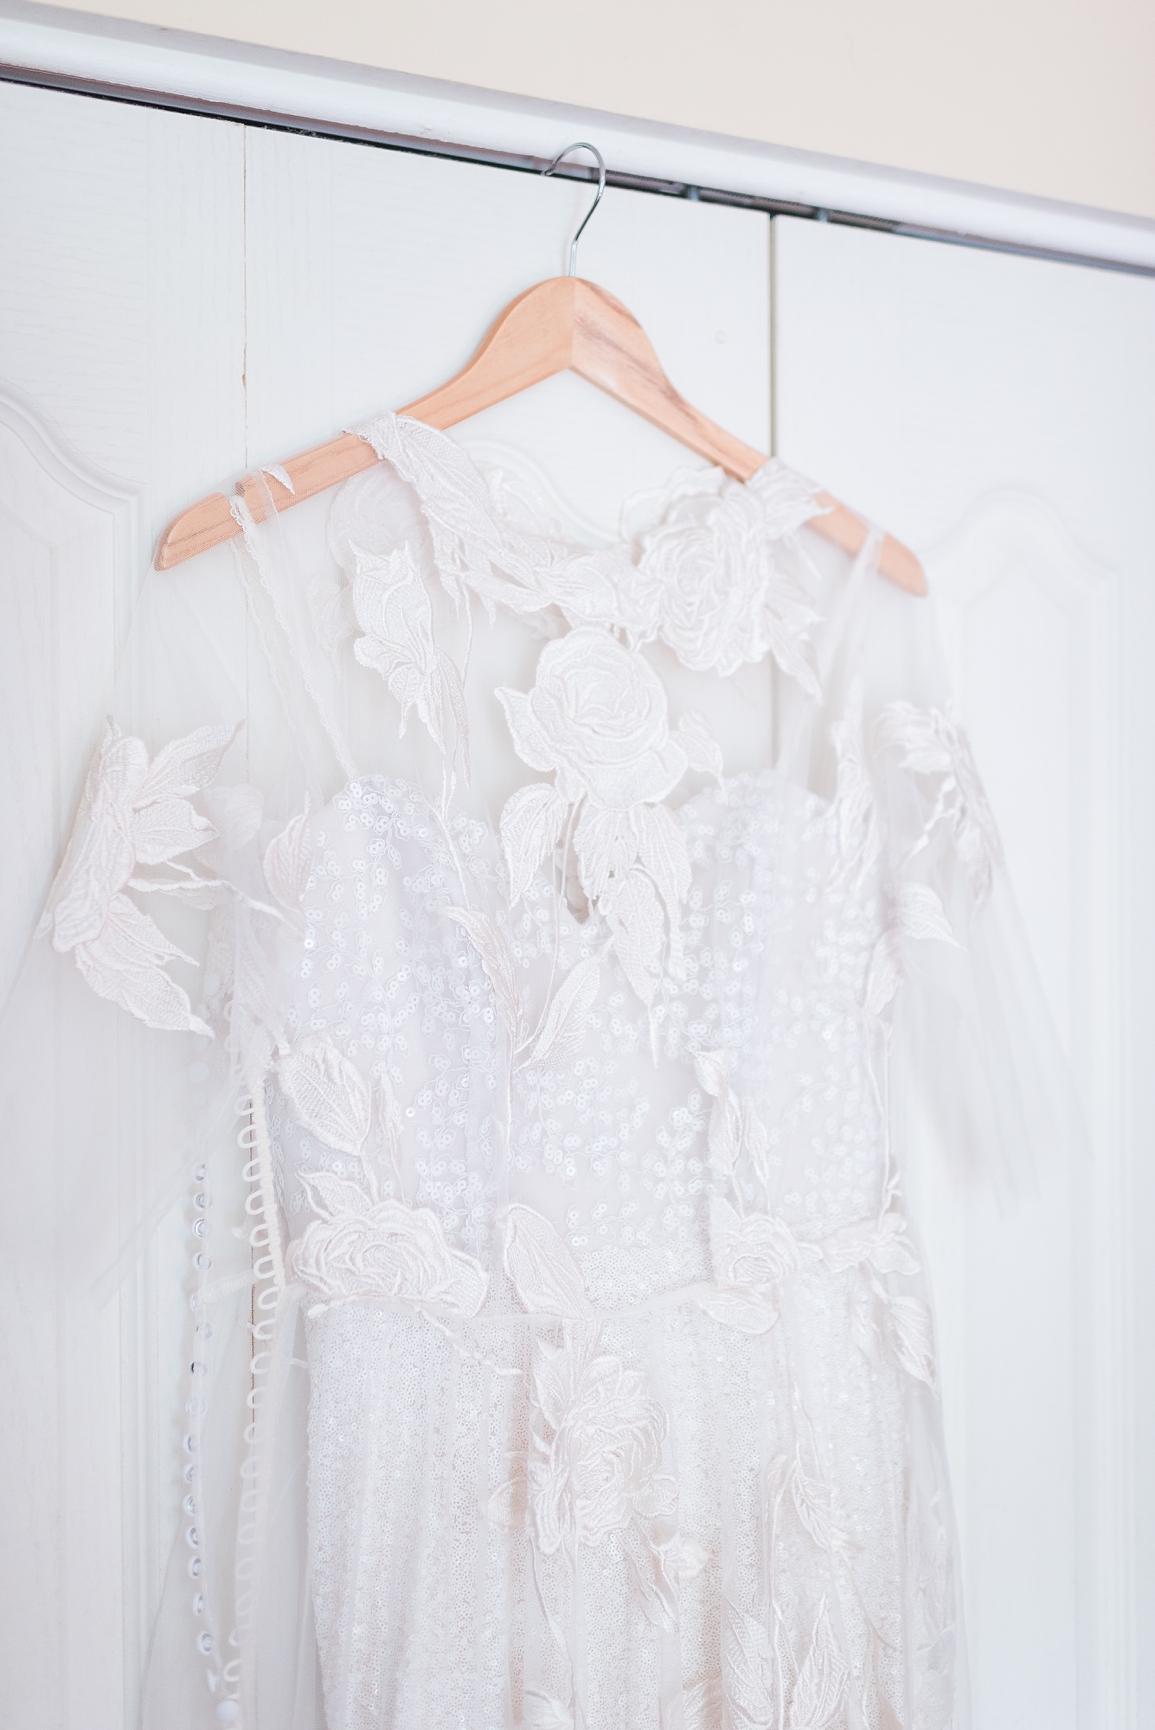 Custom lace wedding gown